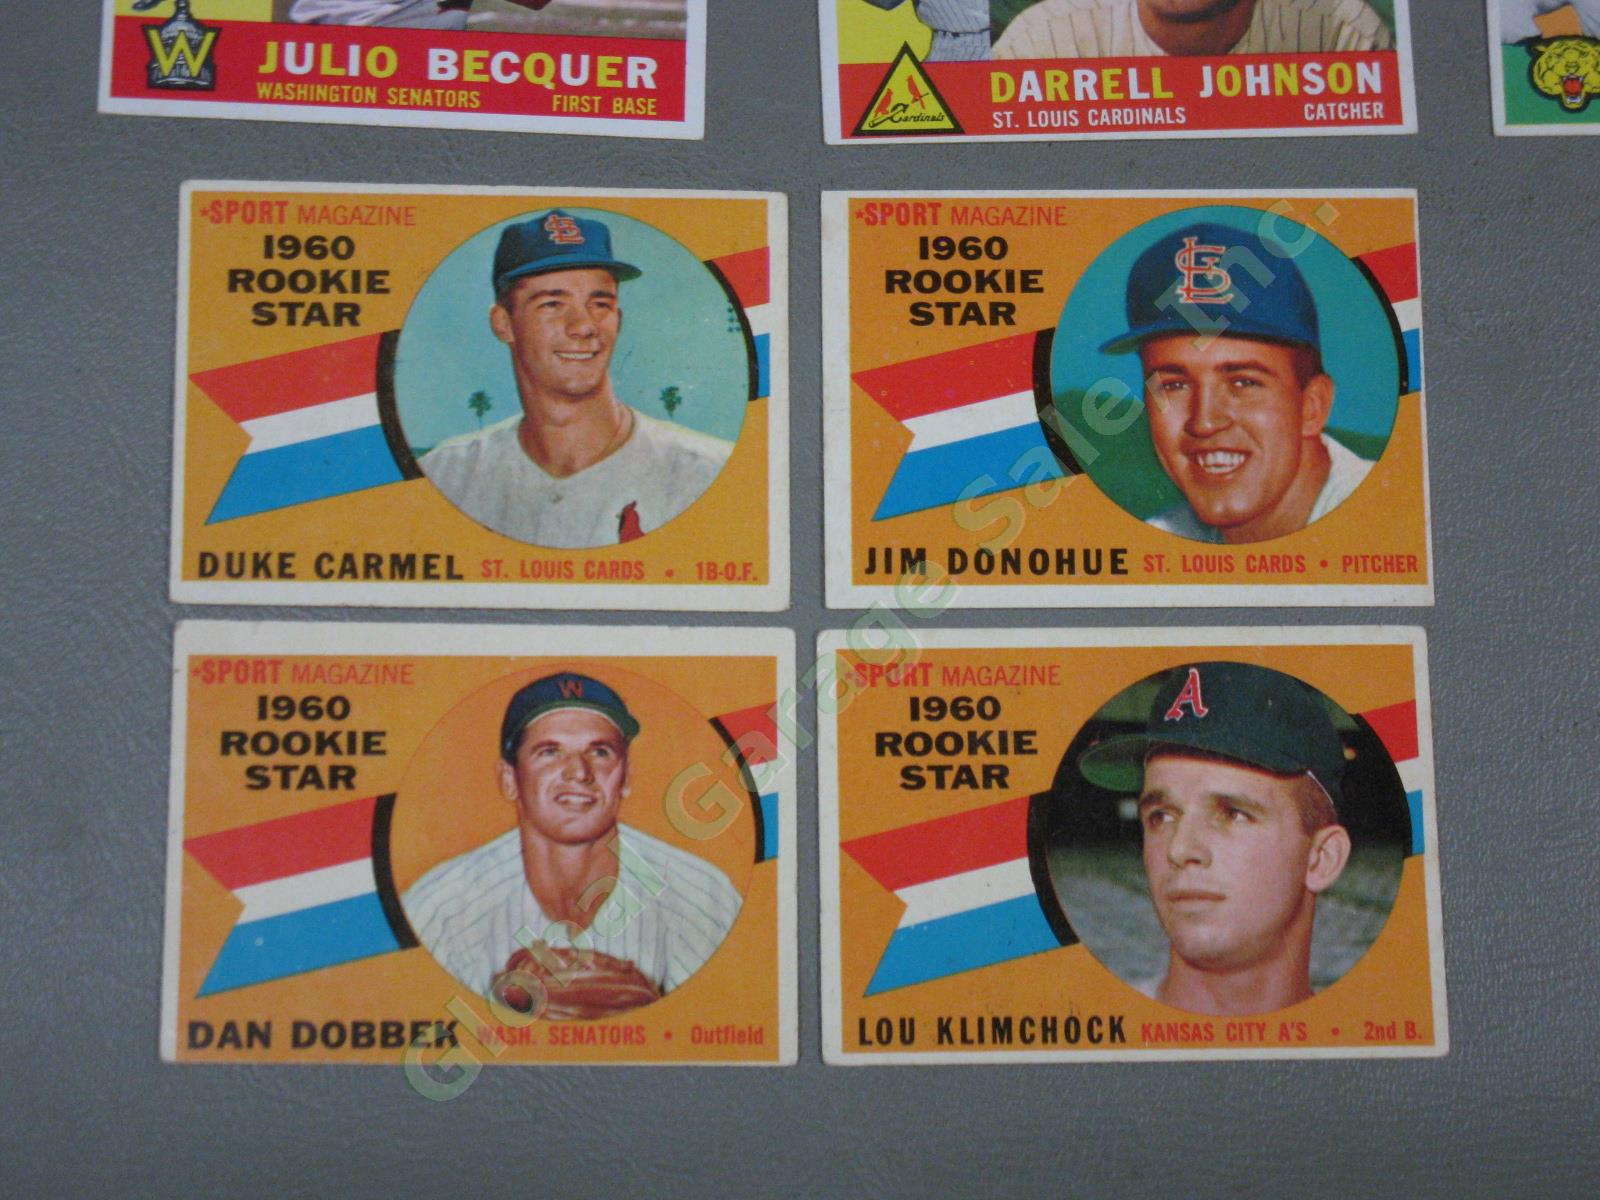 165 VtgTopps 1960 Baseball Card Collection Lot Rookies Teams Senators Braves NR! 1